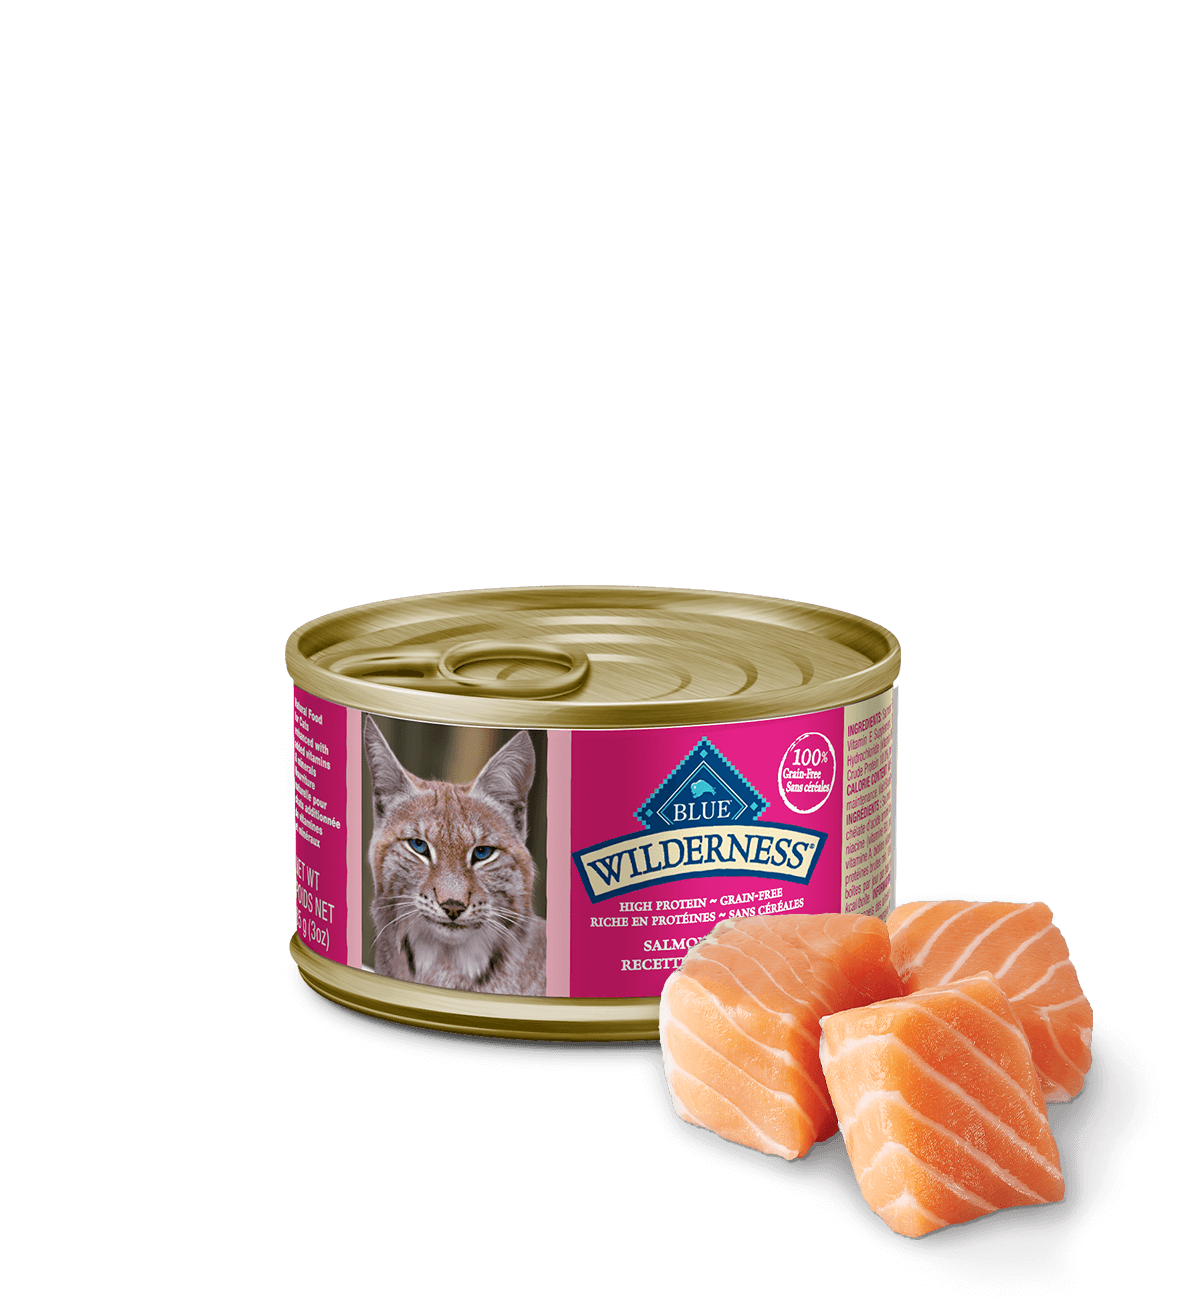 Canada Wild salmon adult wet cat food